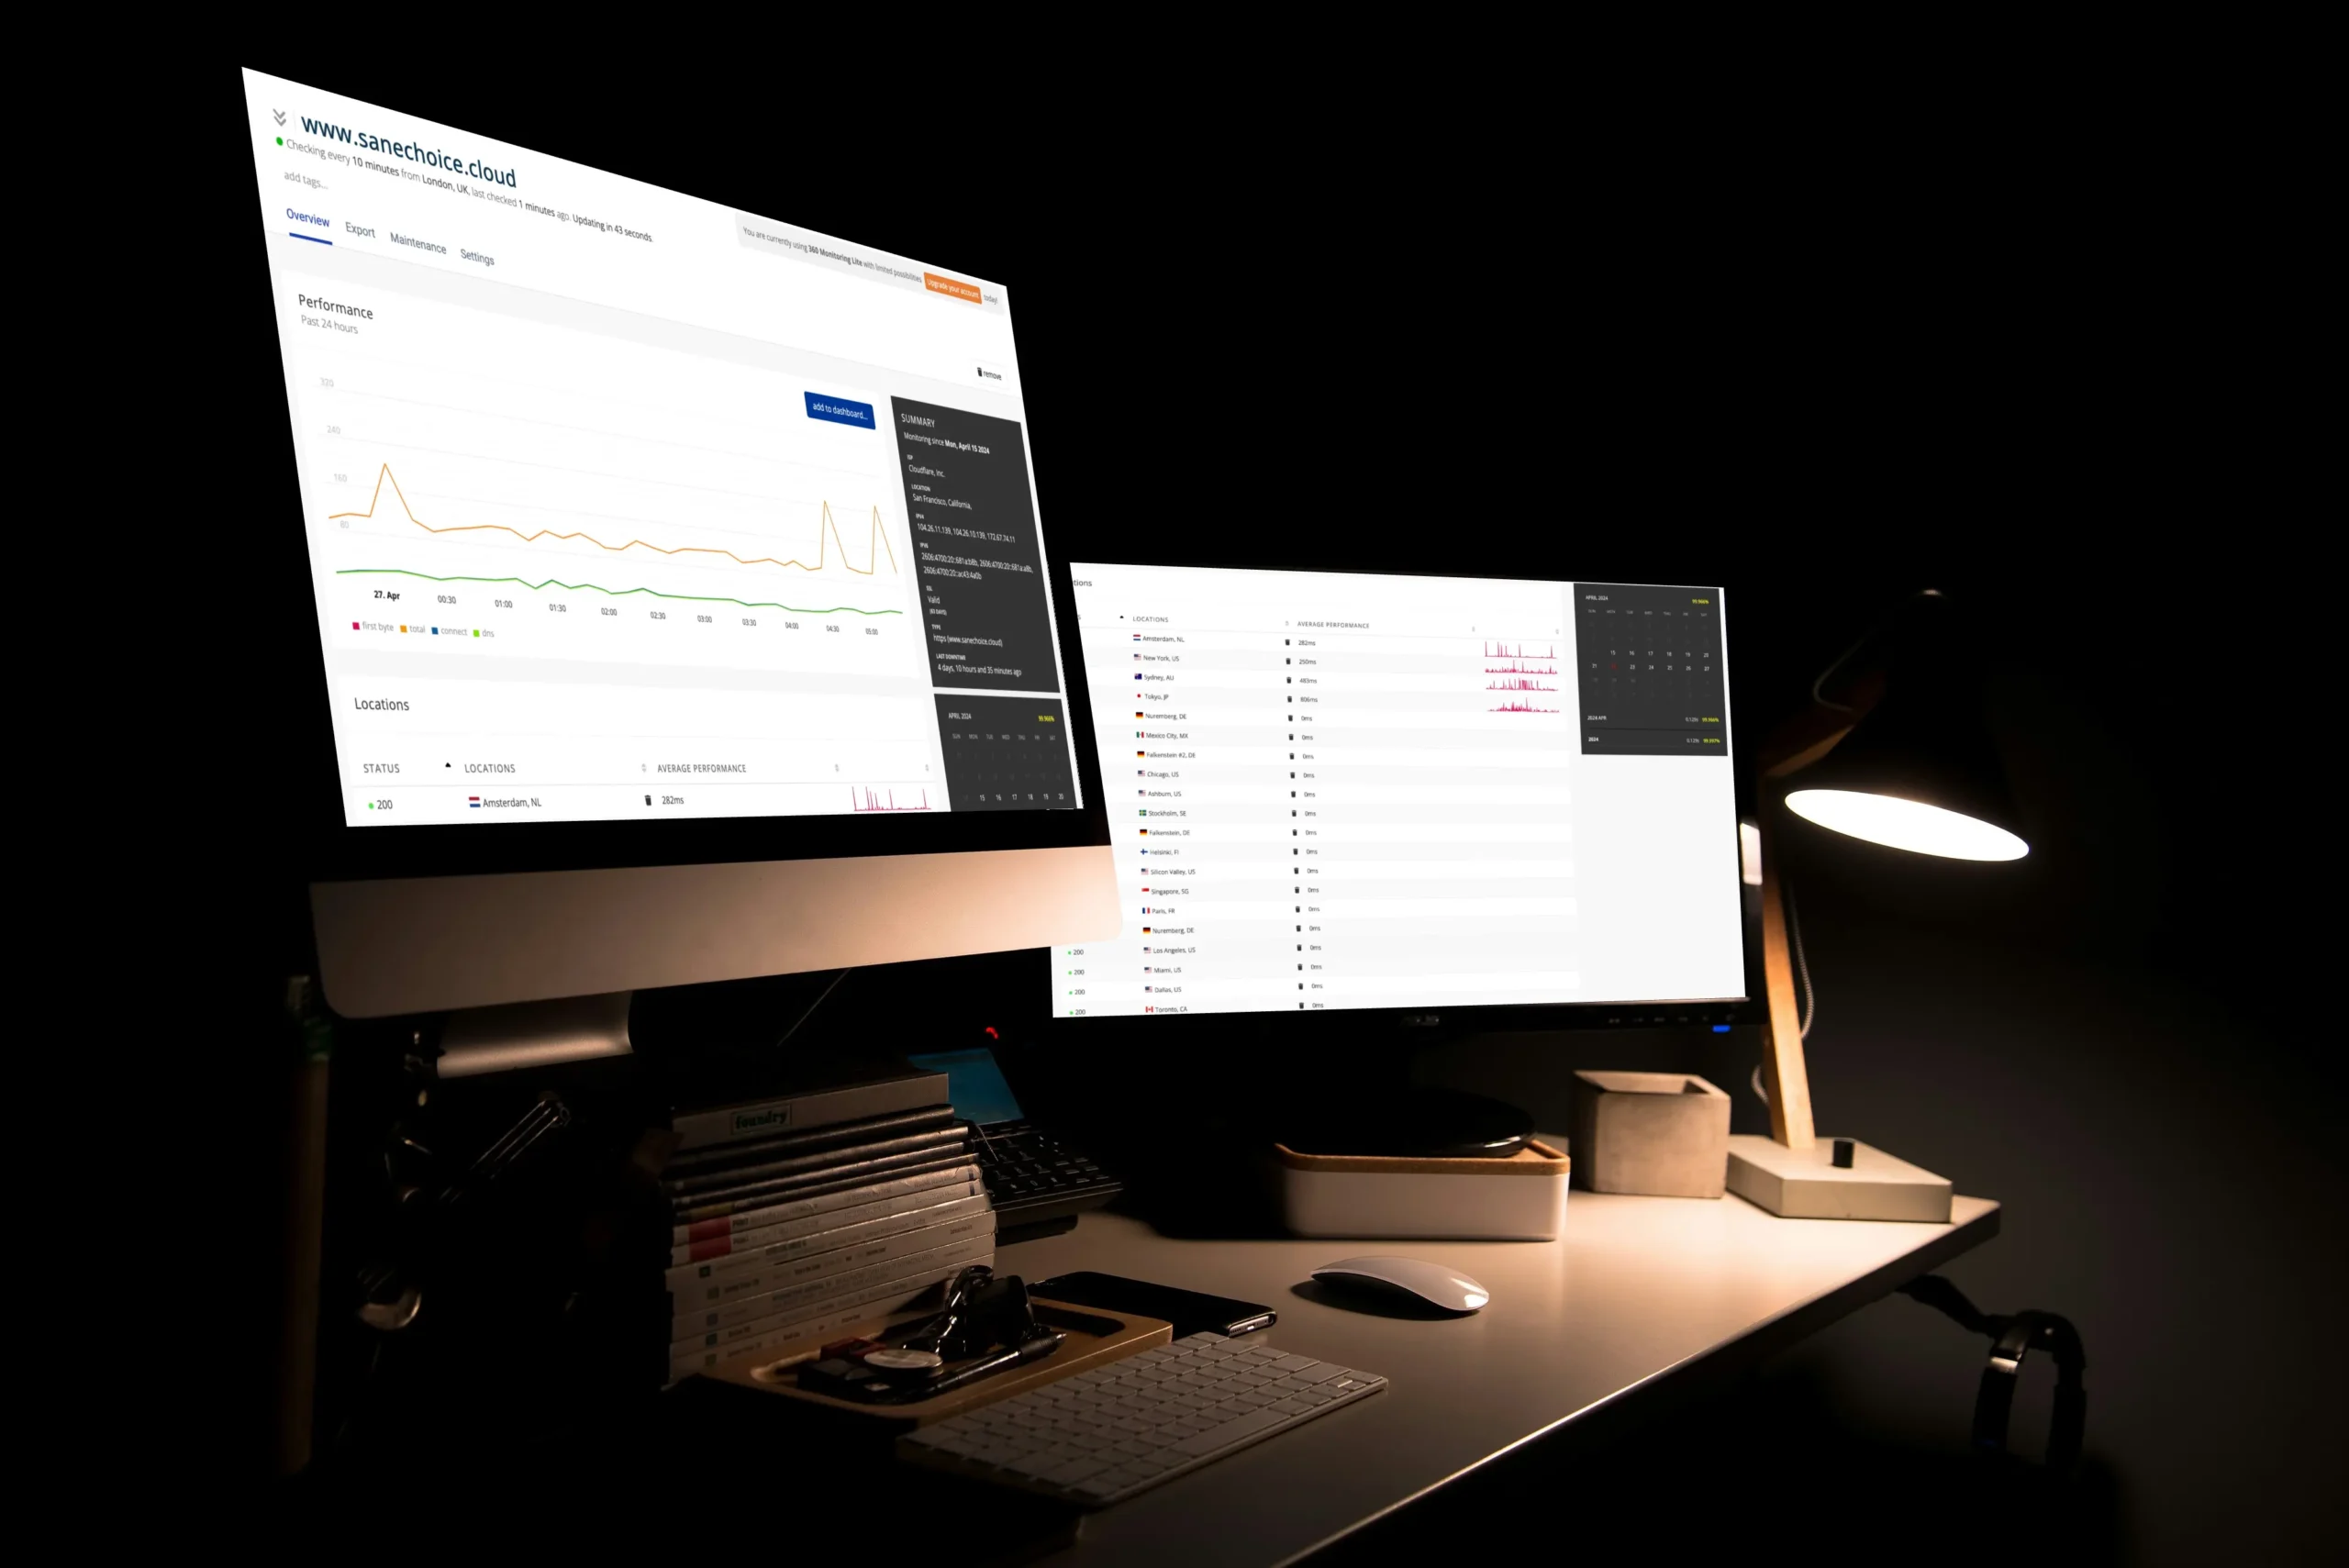 Dual monitors displaying website analytics in dark office.